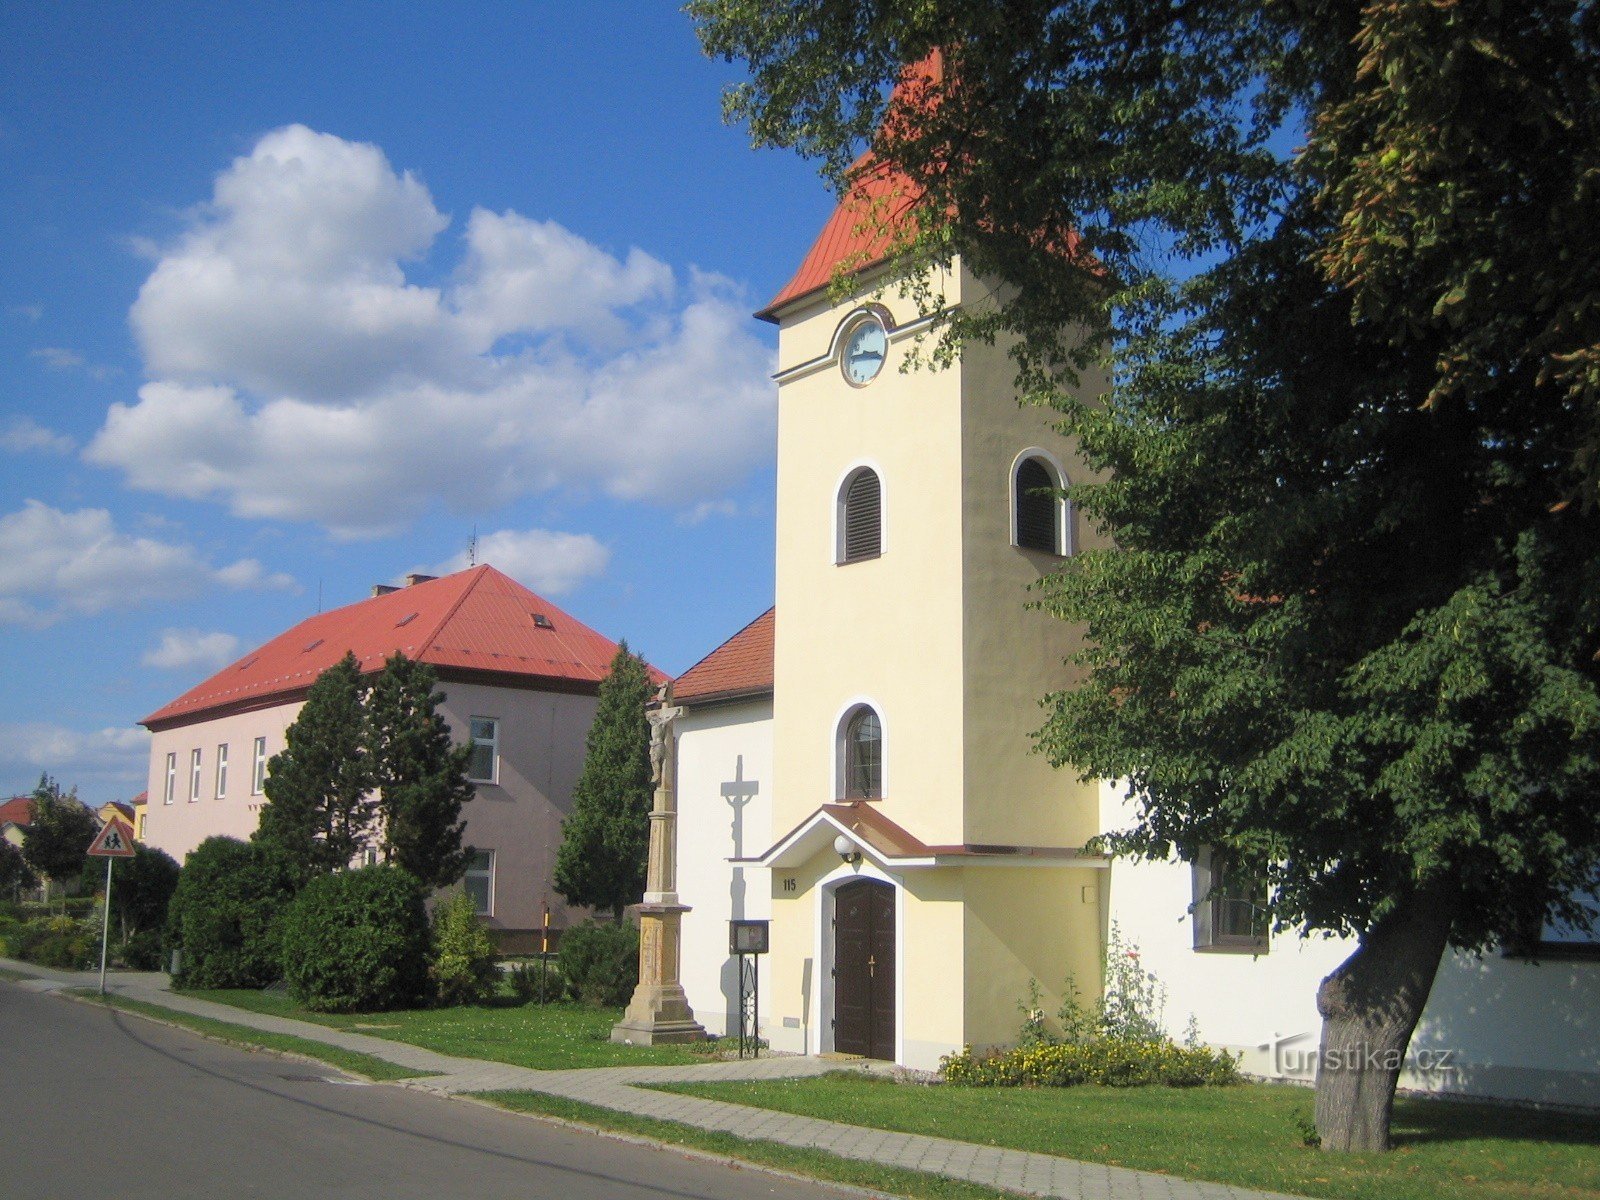 Knežpole - šola in cerkev